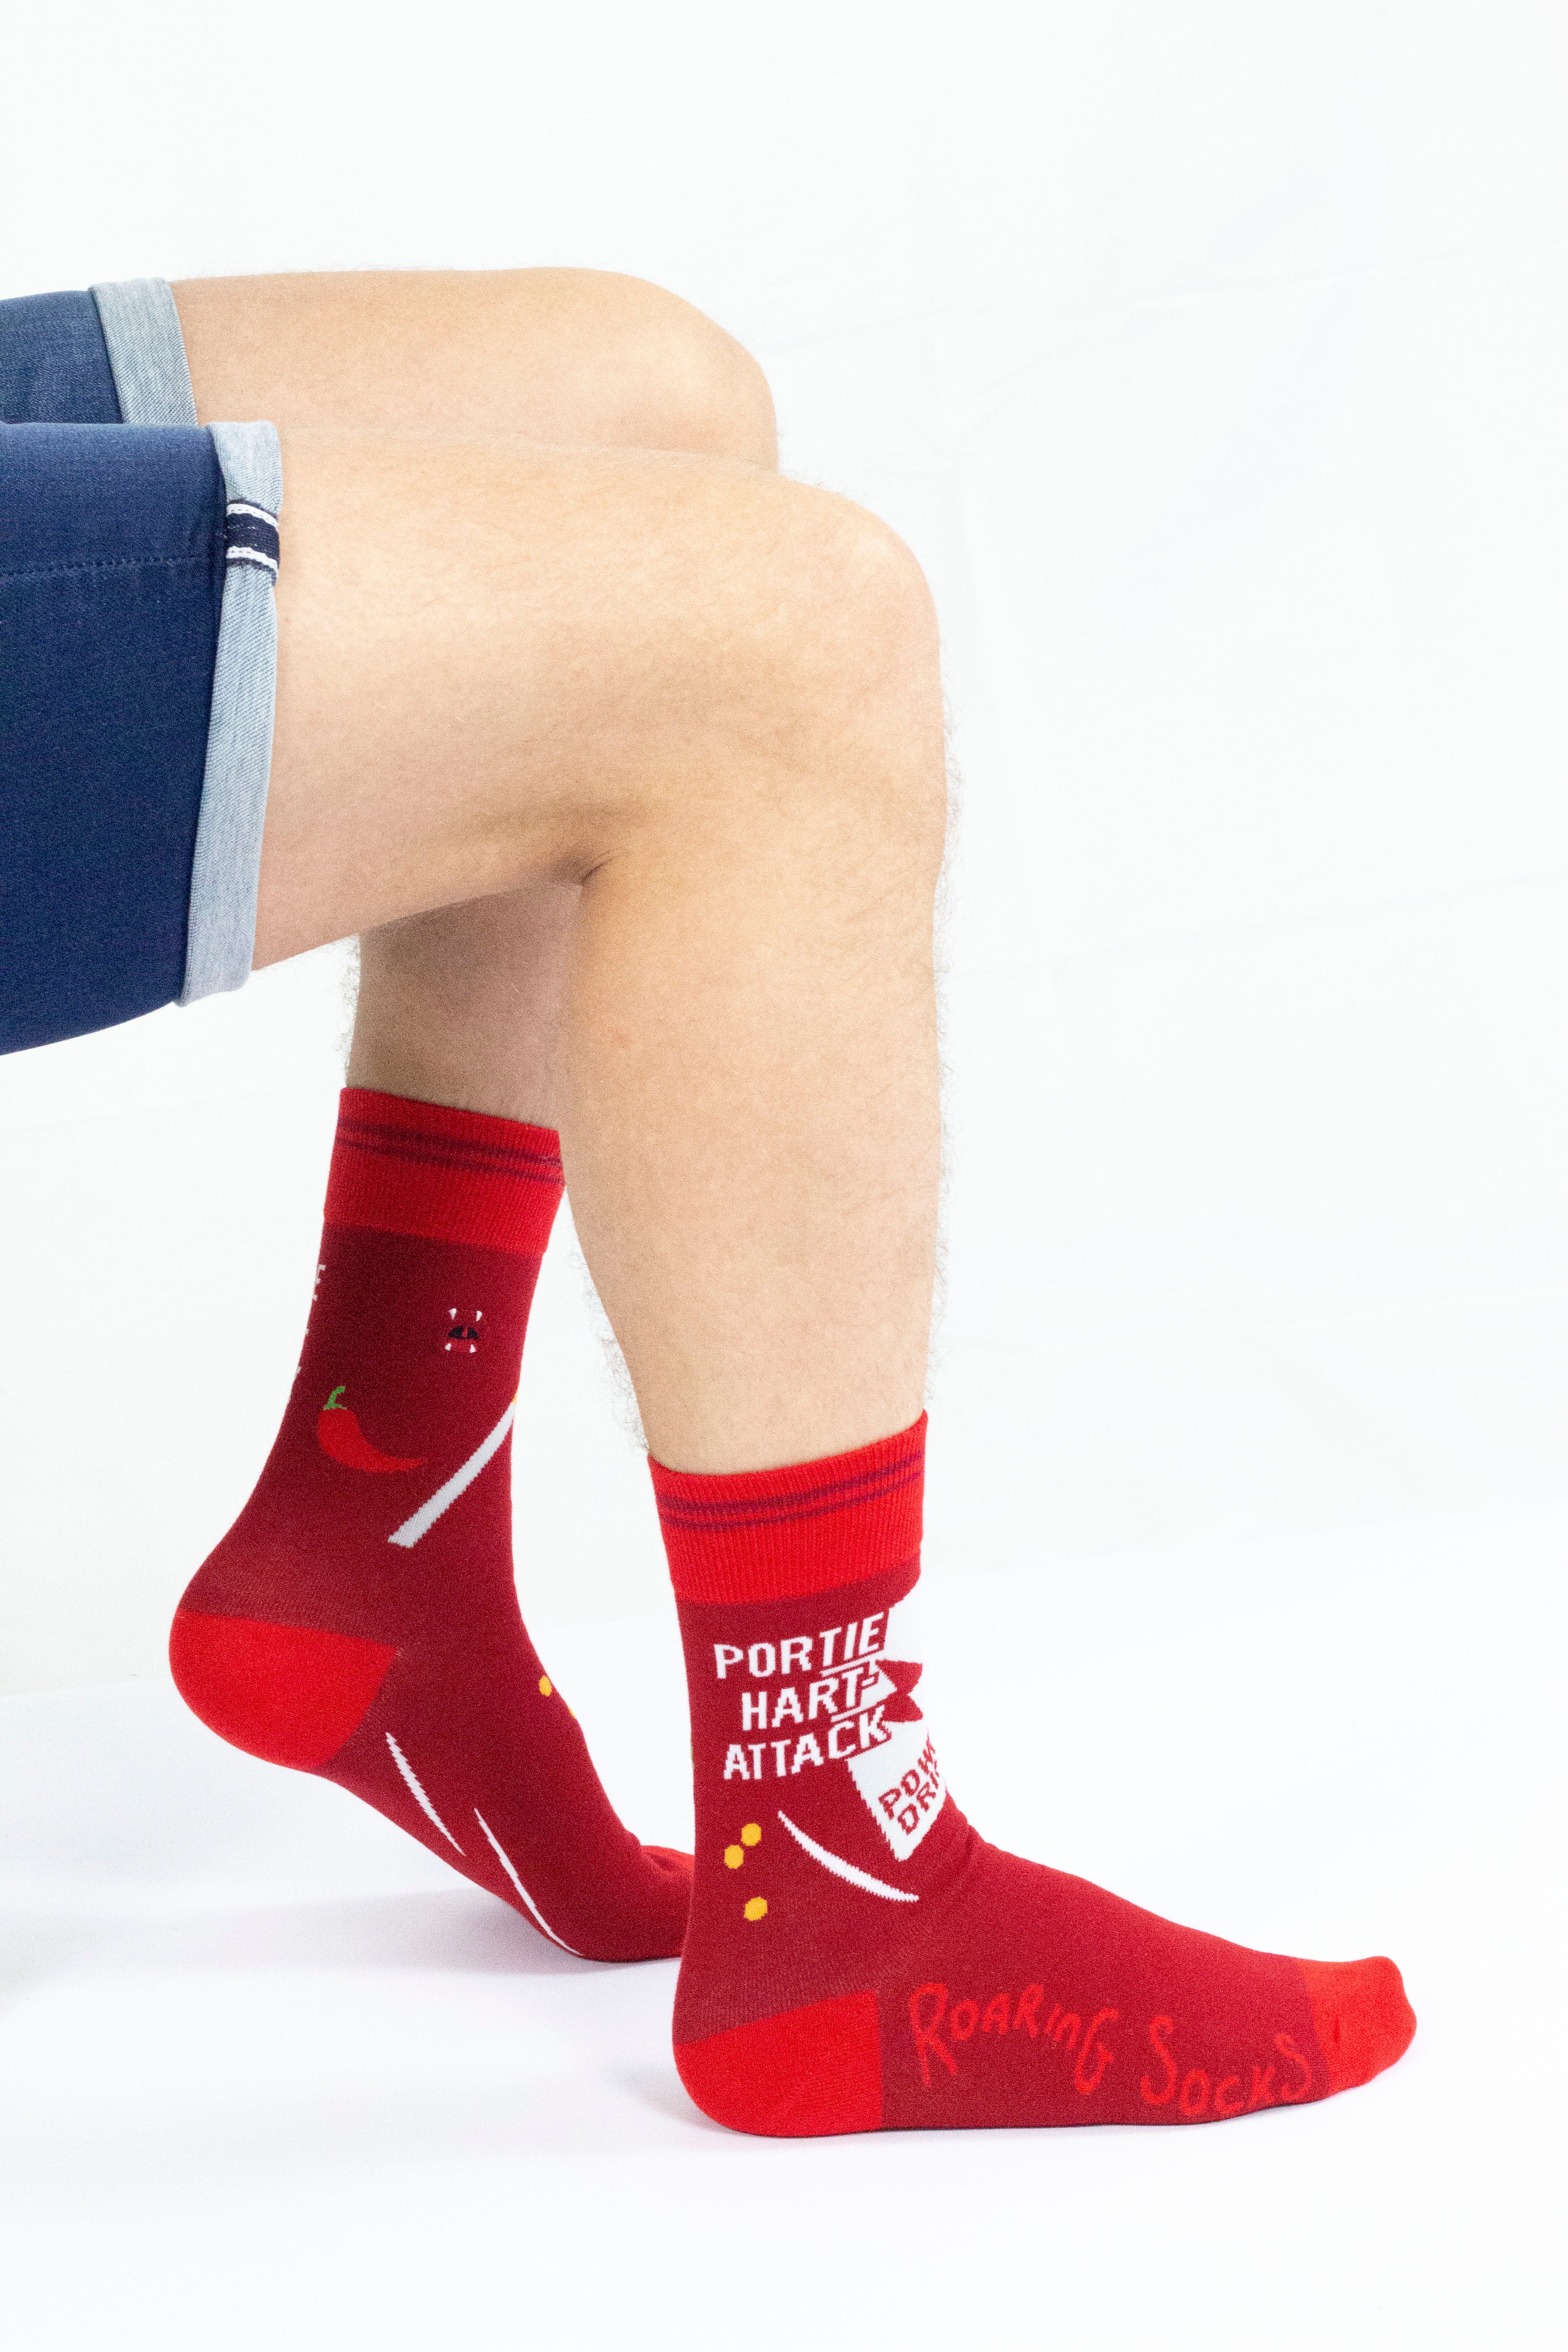 Roaring Socks - Sokken – Portie hartattack - Rood – Pillen energy drink drugs Hartaanval - Café - Katoen - Leuk - Grappig - Vrolijk - Fashion – Cadeau